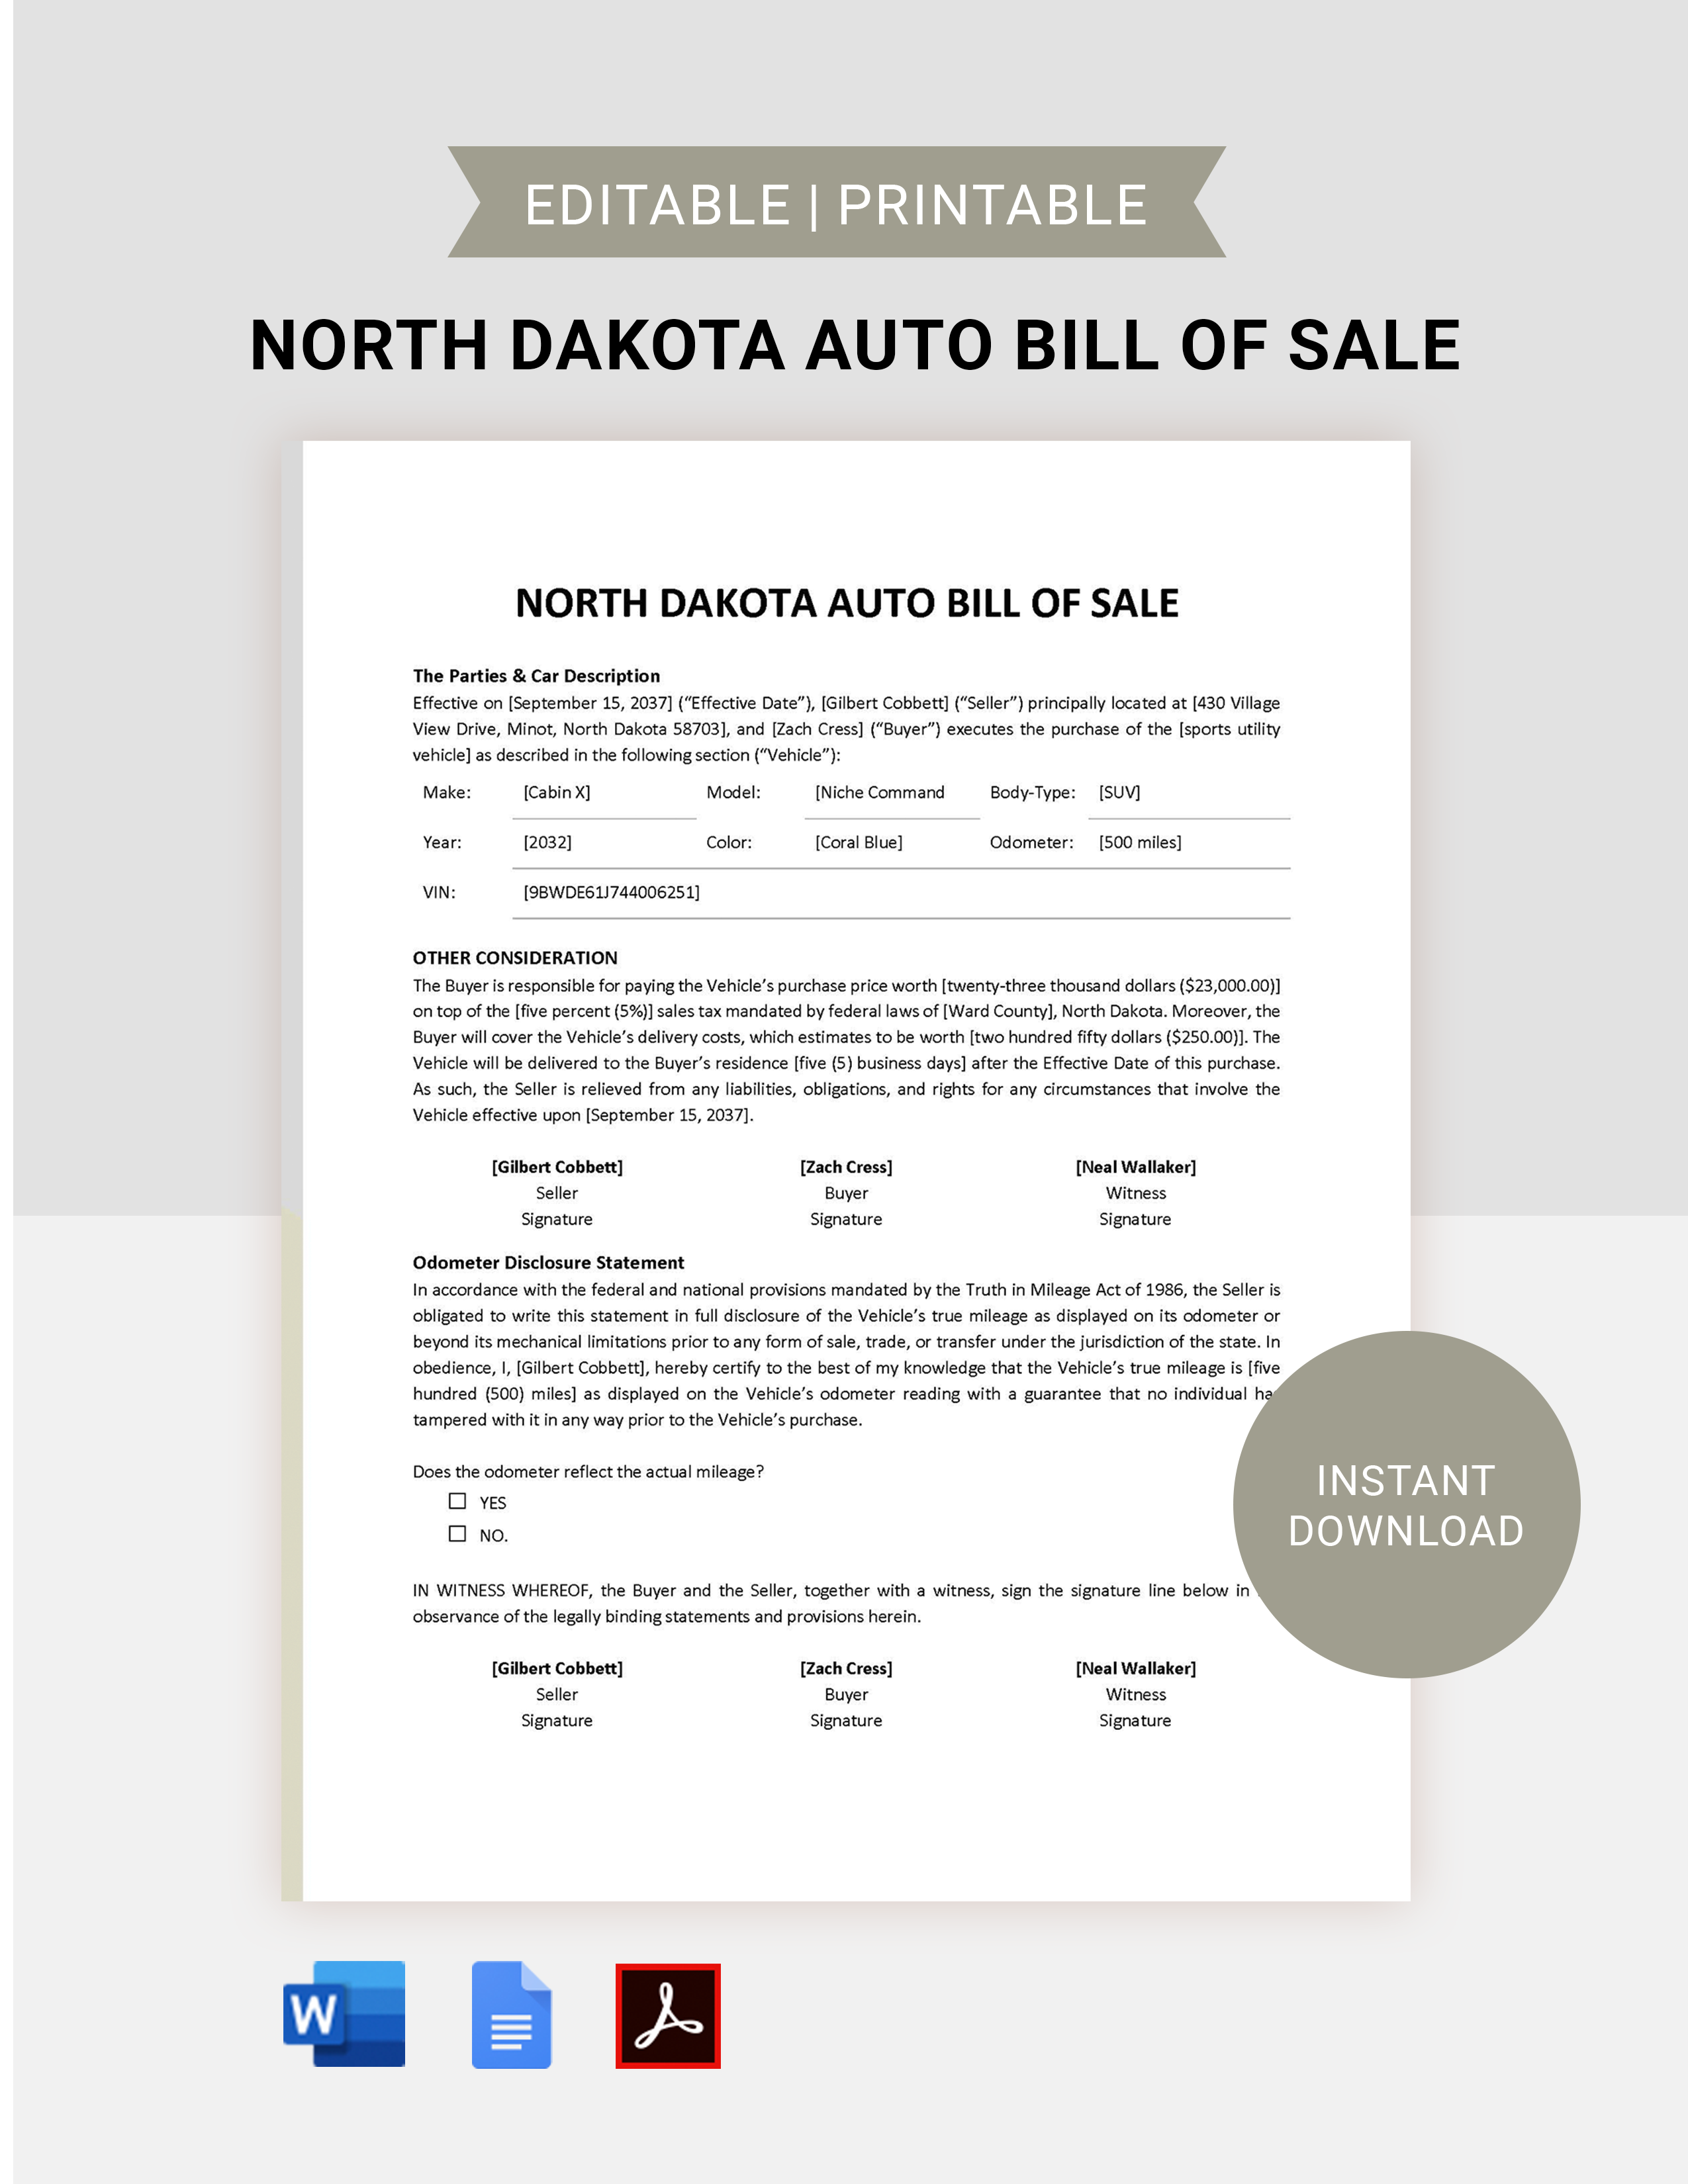 North Dakota Auto Bill of Sale Template